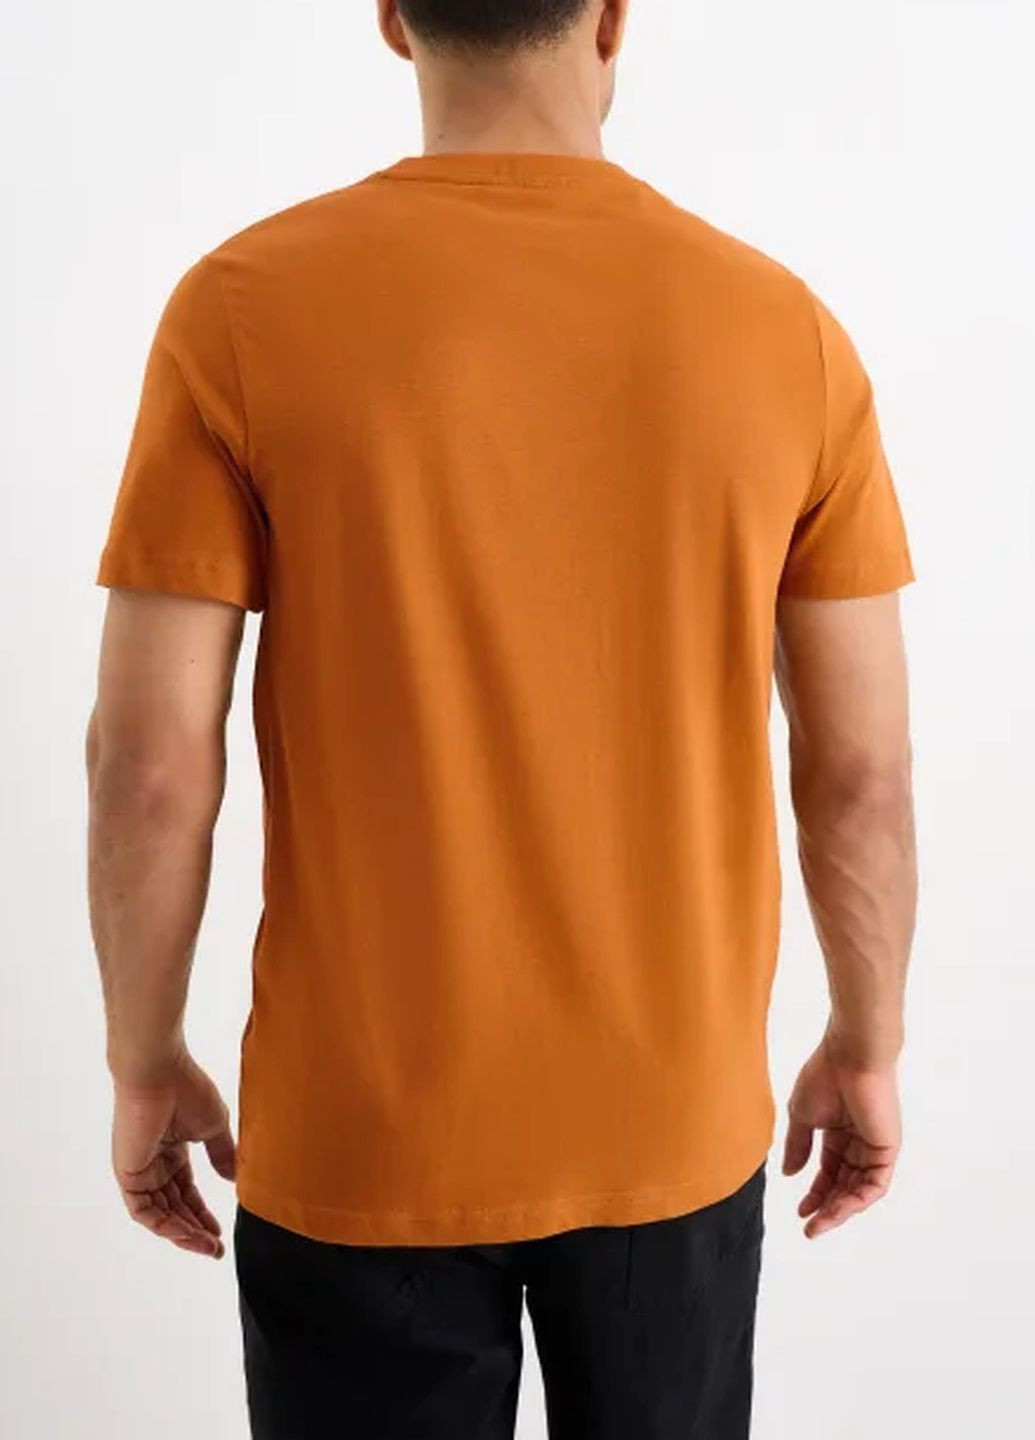 Оранжевая футболка C&A